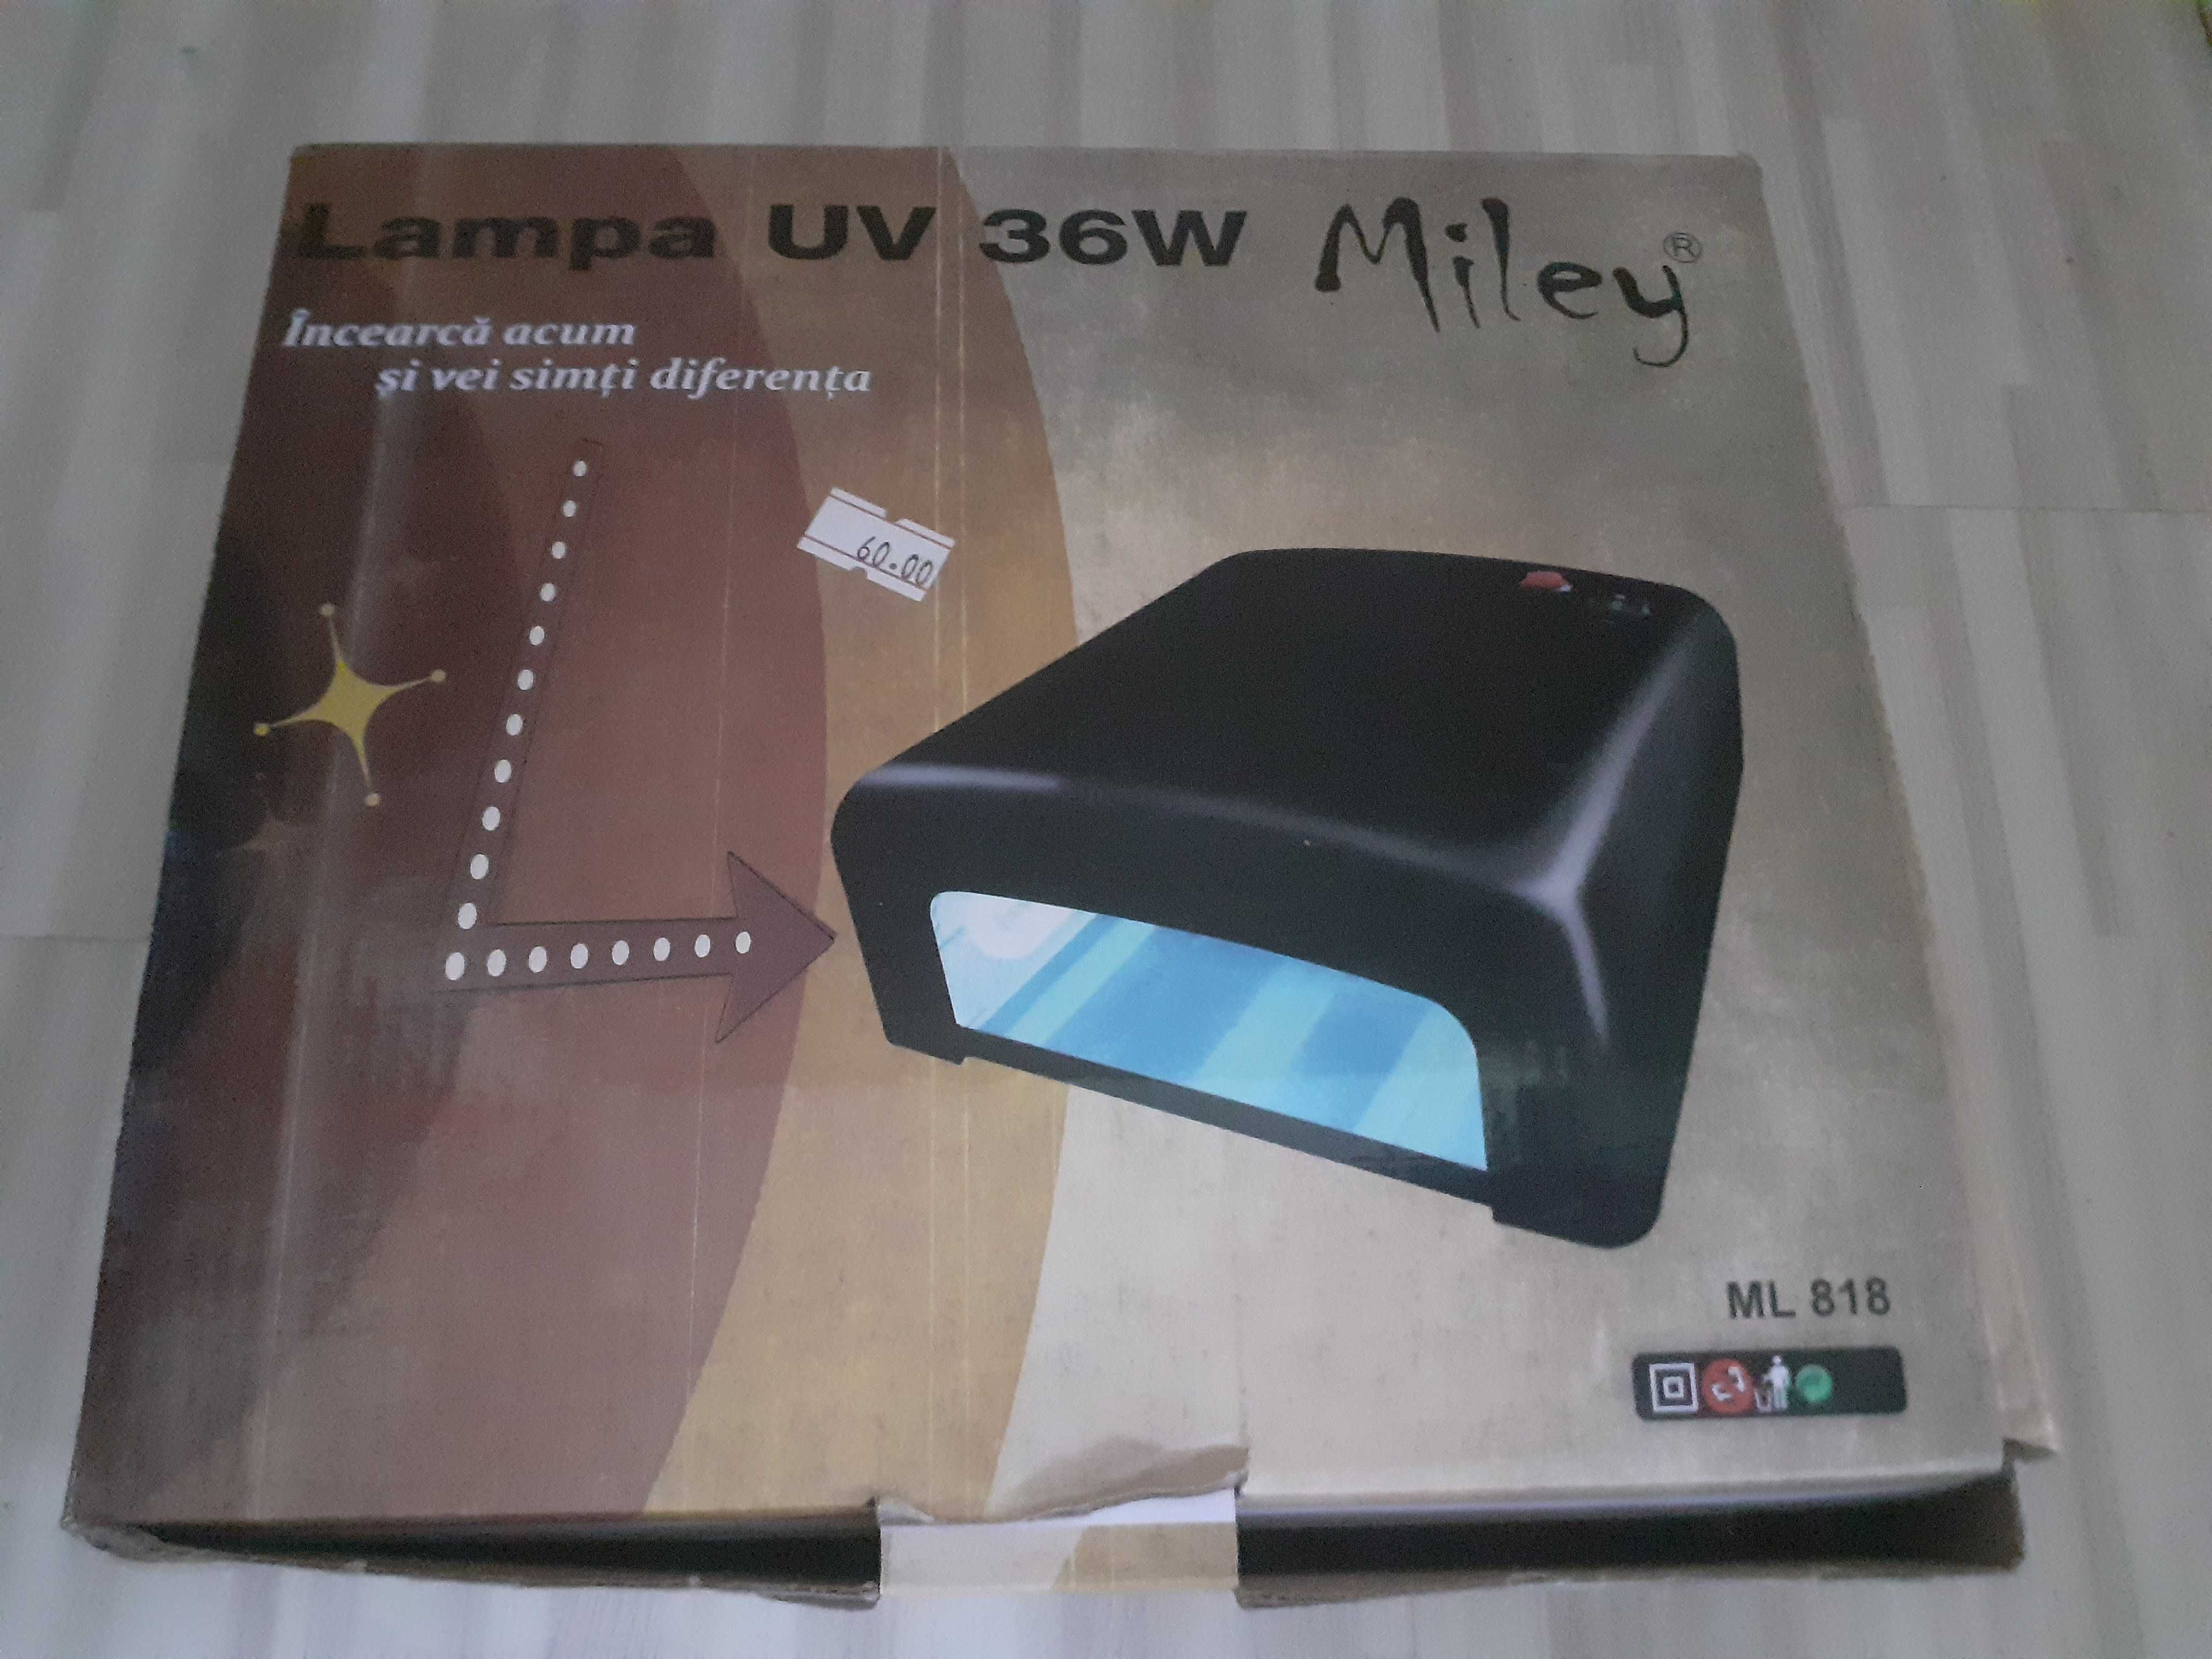 Vand lampa UV Miley,  36 W, pret  40 lei